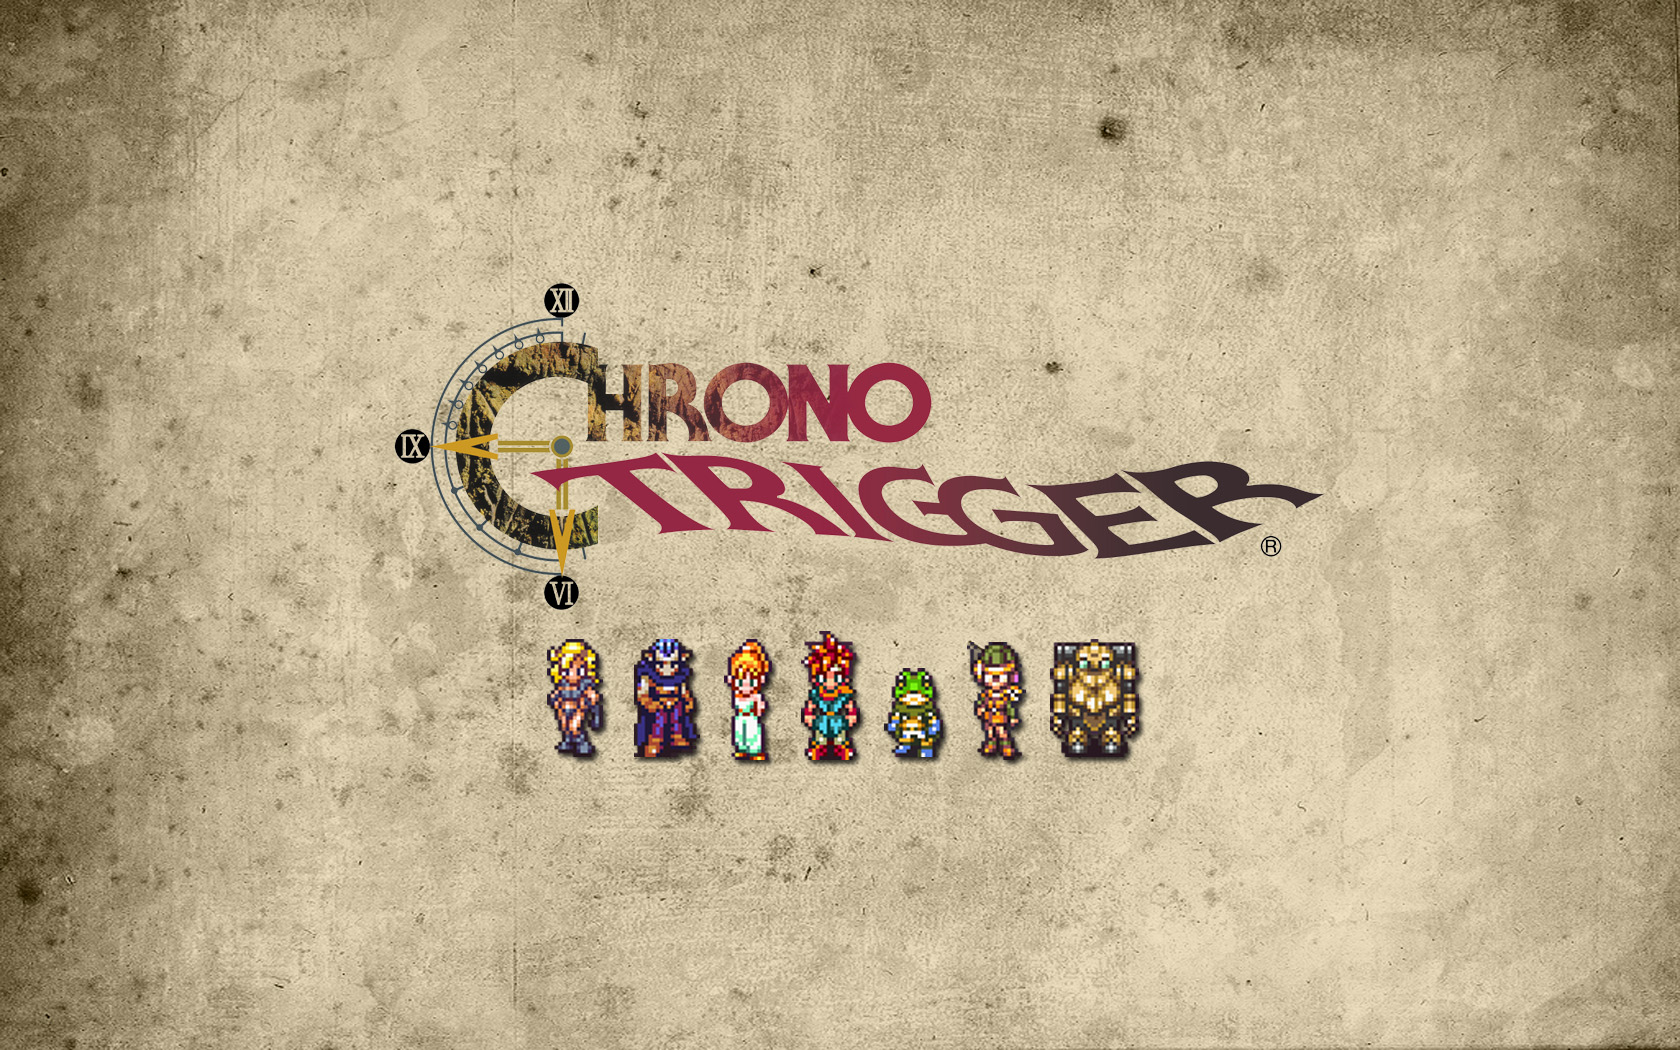 chrono trigger, video game